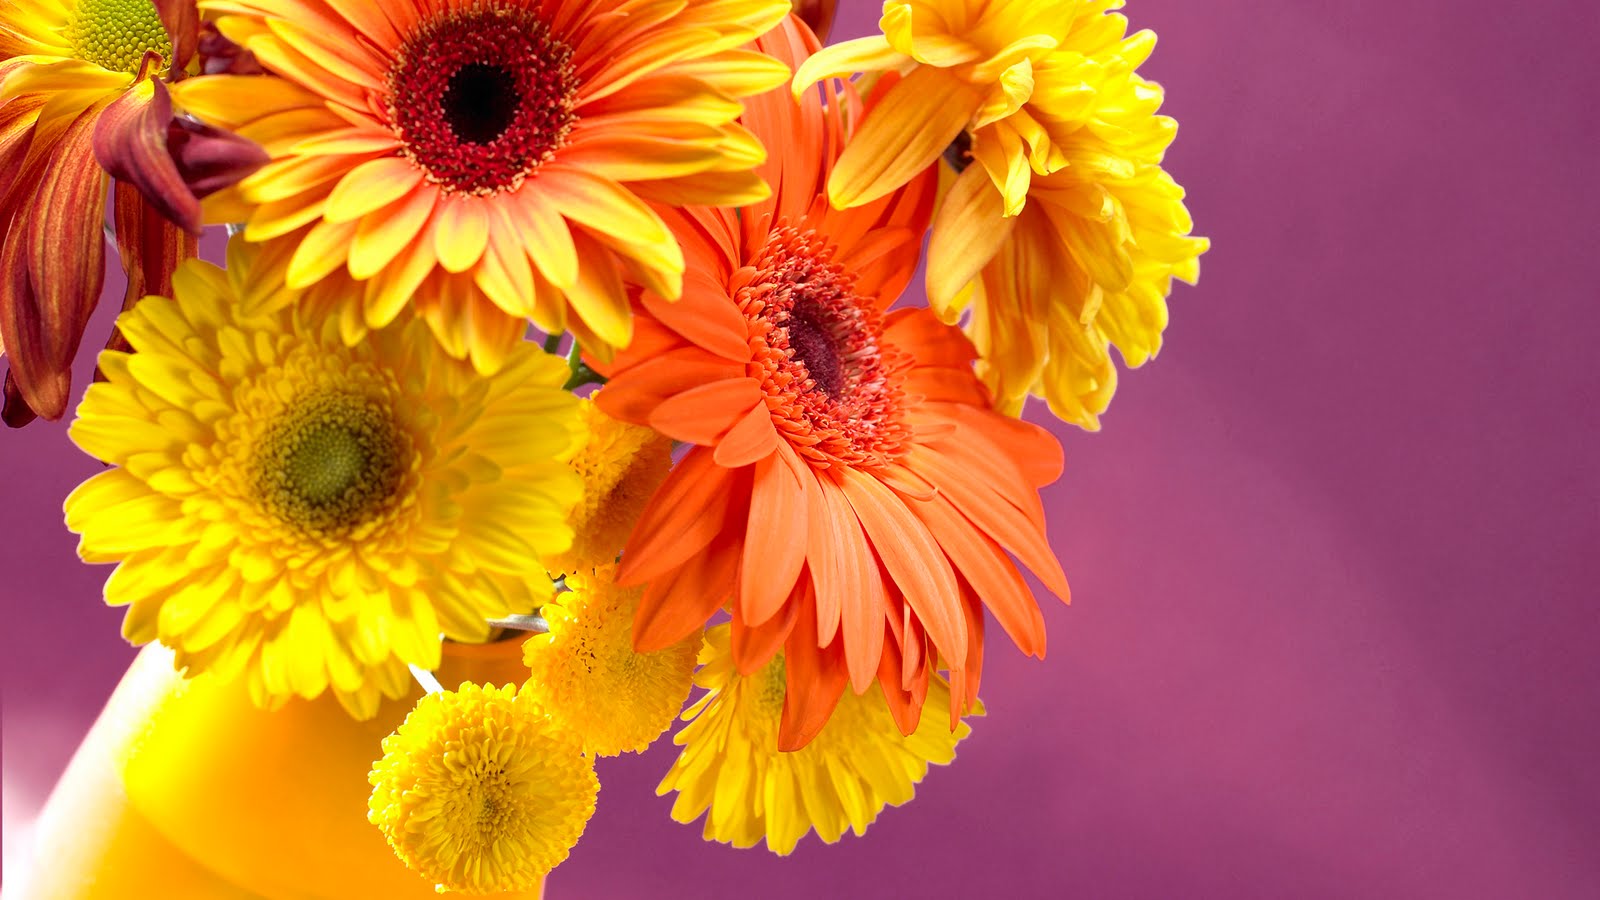 Jaspreet Rekhi Colorful Flowers Wallpaper Full HD 1080p Rar